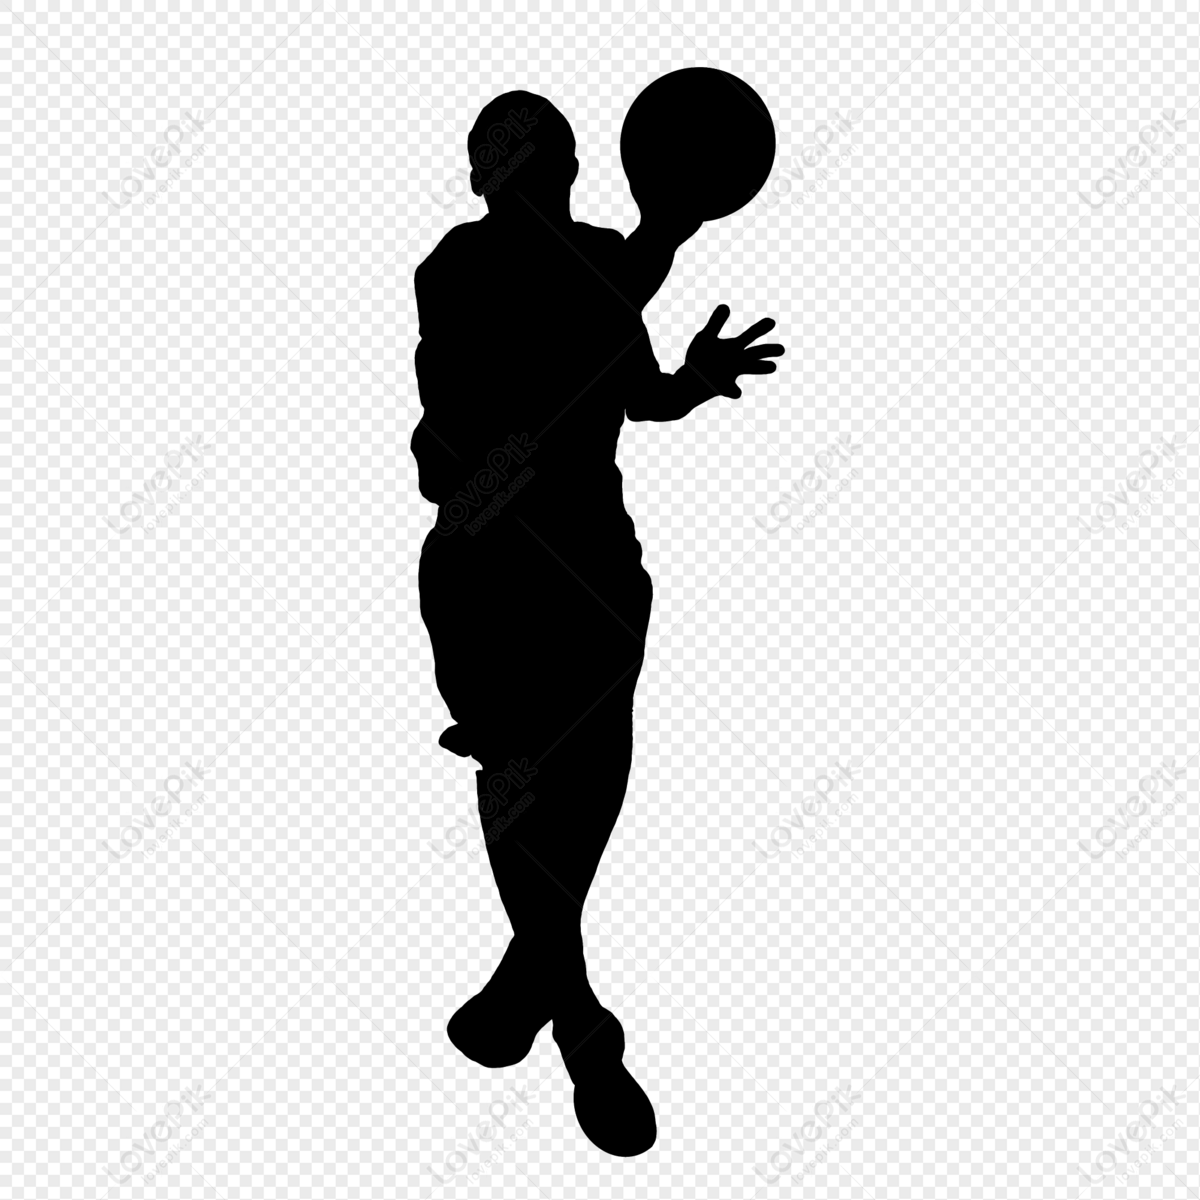 Basketball Layup Silhouette, Black Silhouette, Basketball Player ...